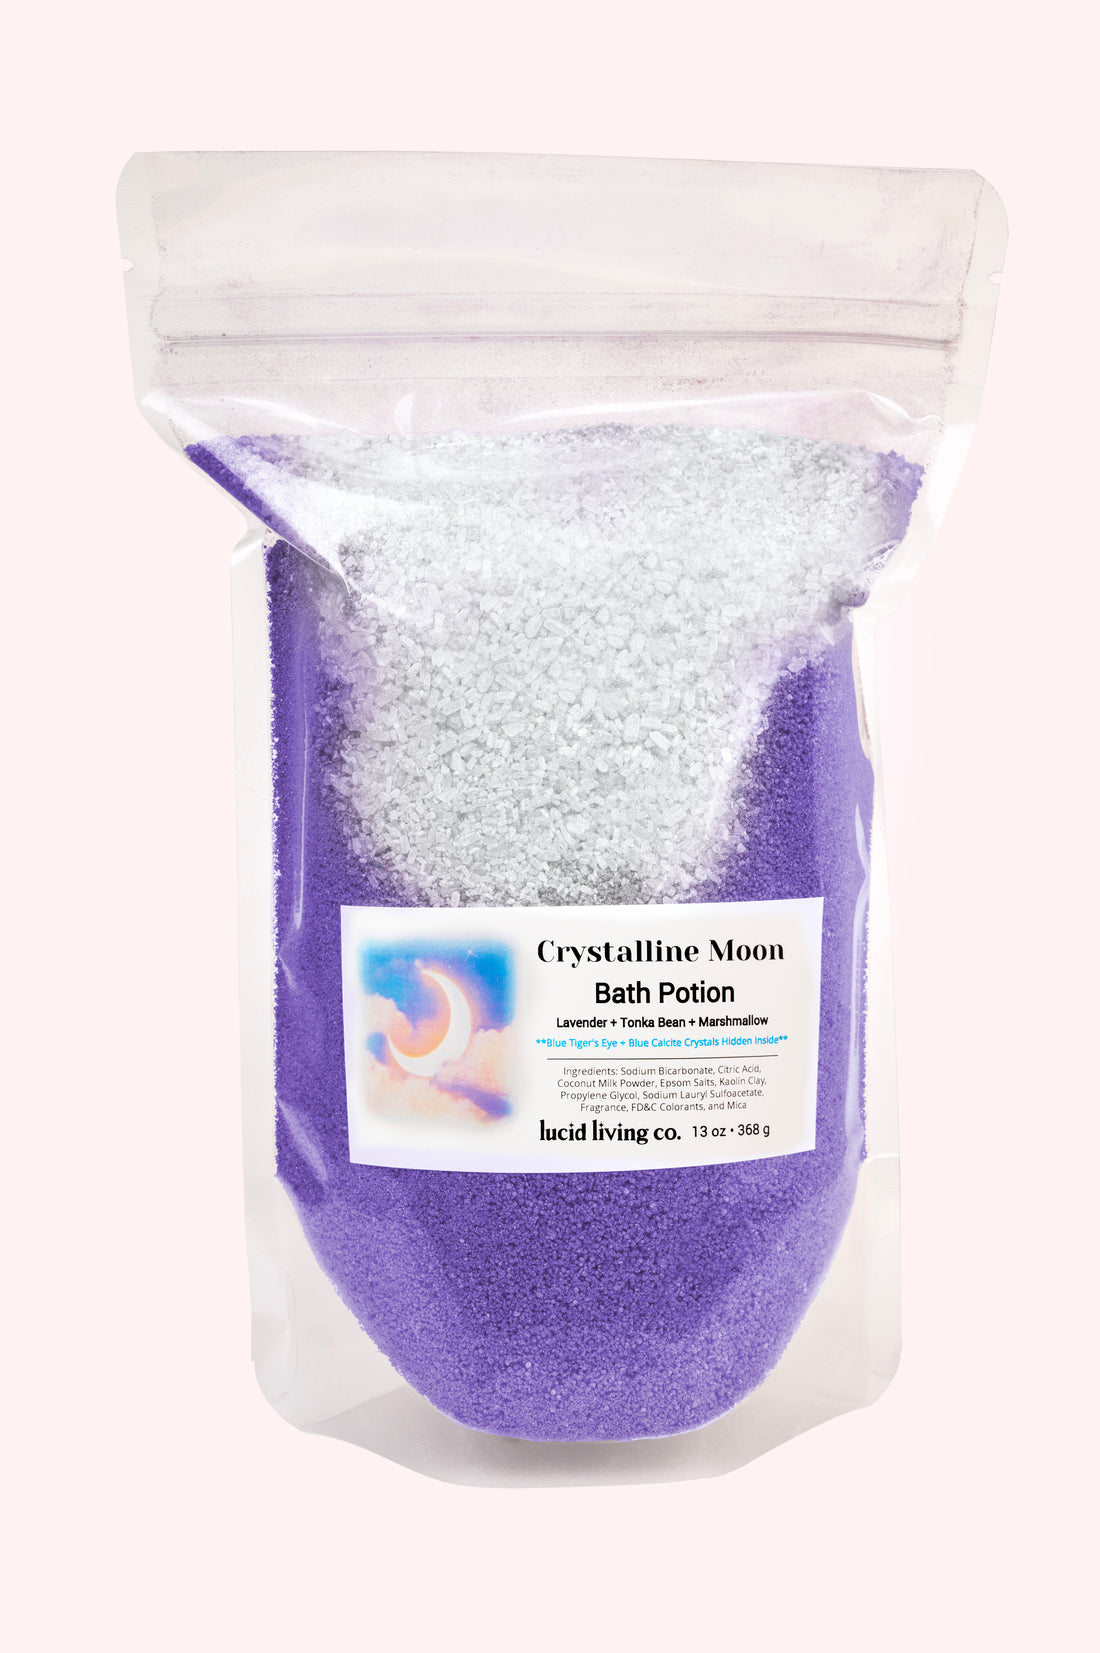 Crystalline Moon Bath Potion